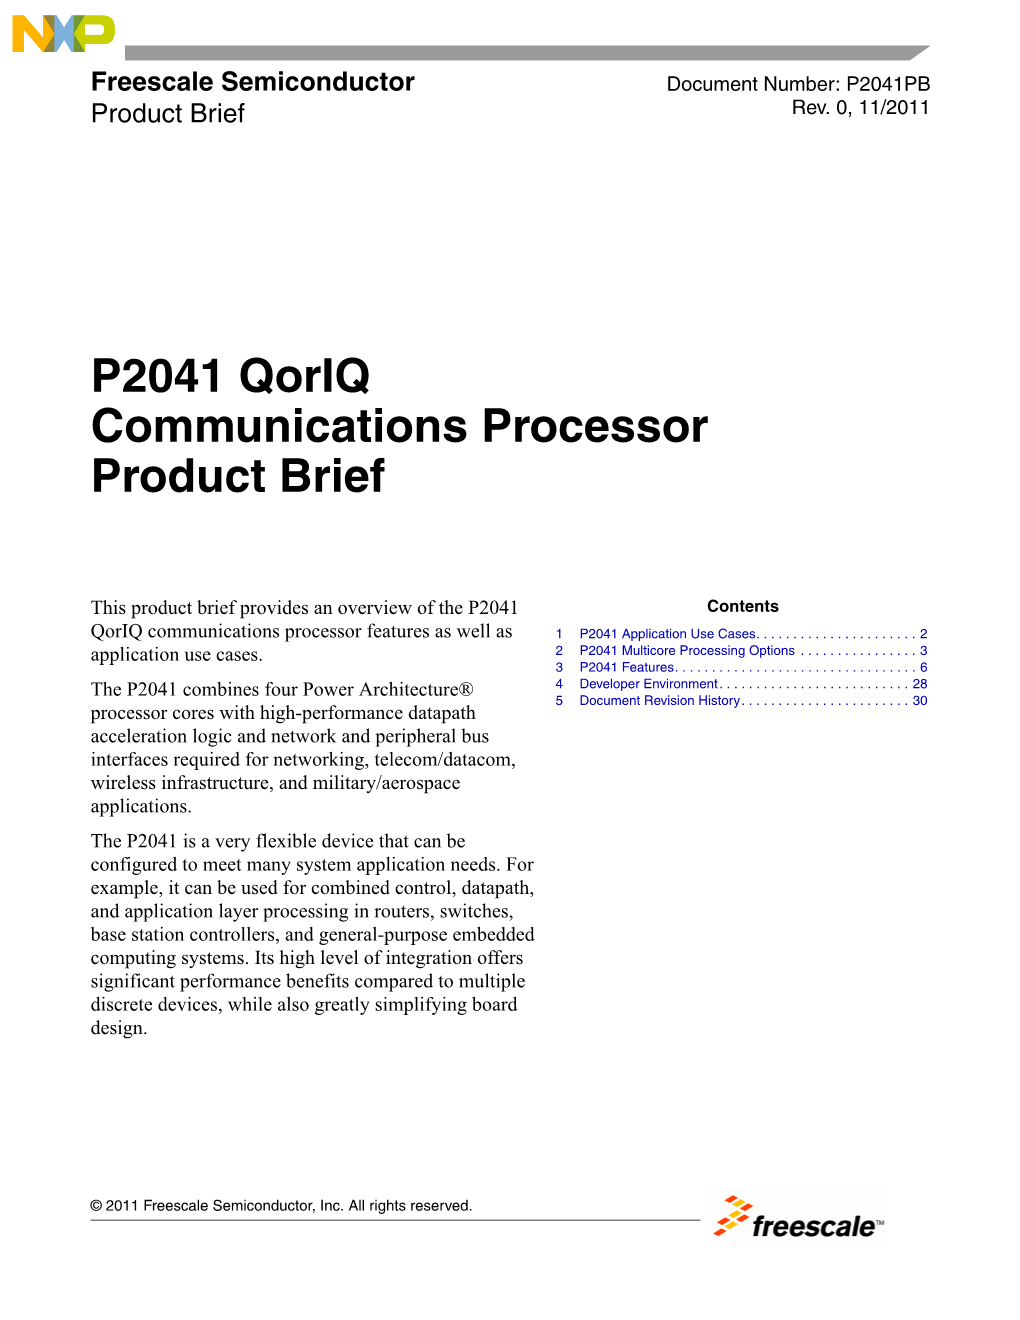 P2041 Qoriq Communication Processor Product Brief